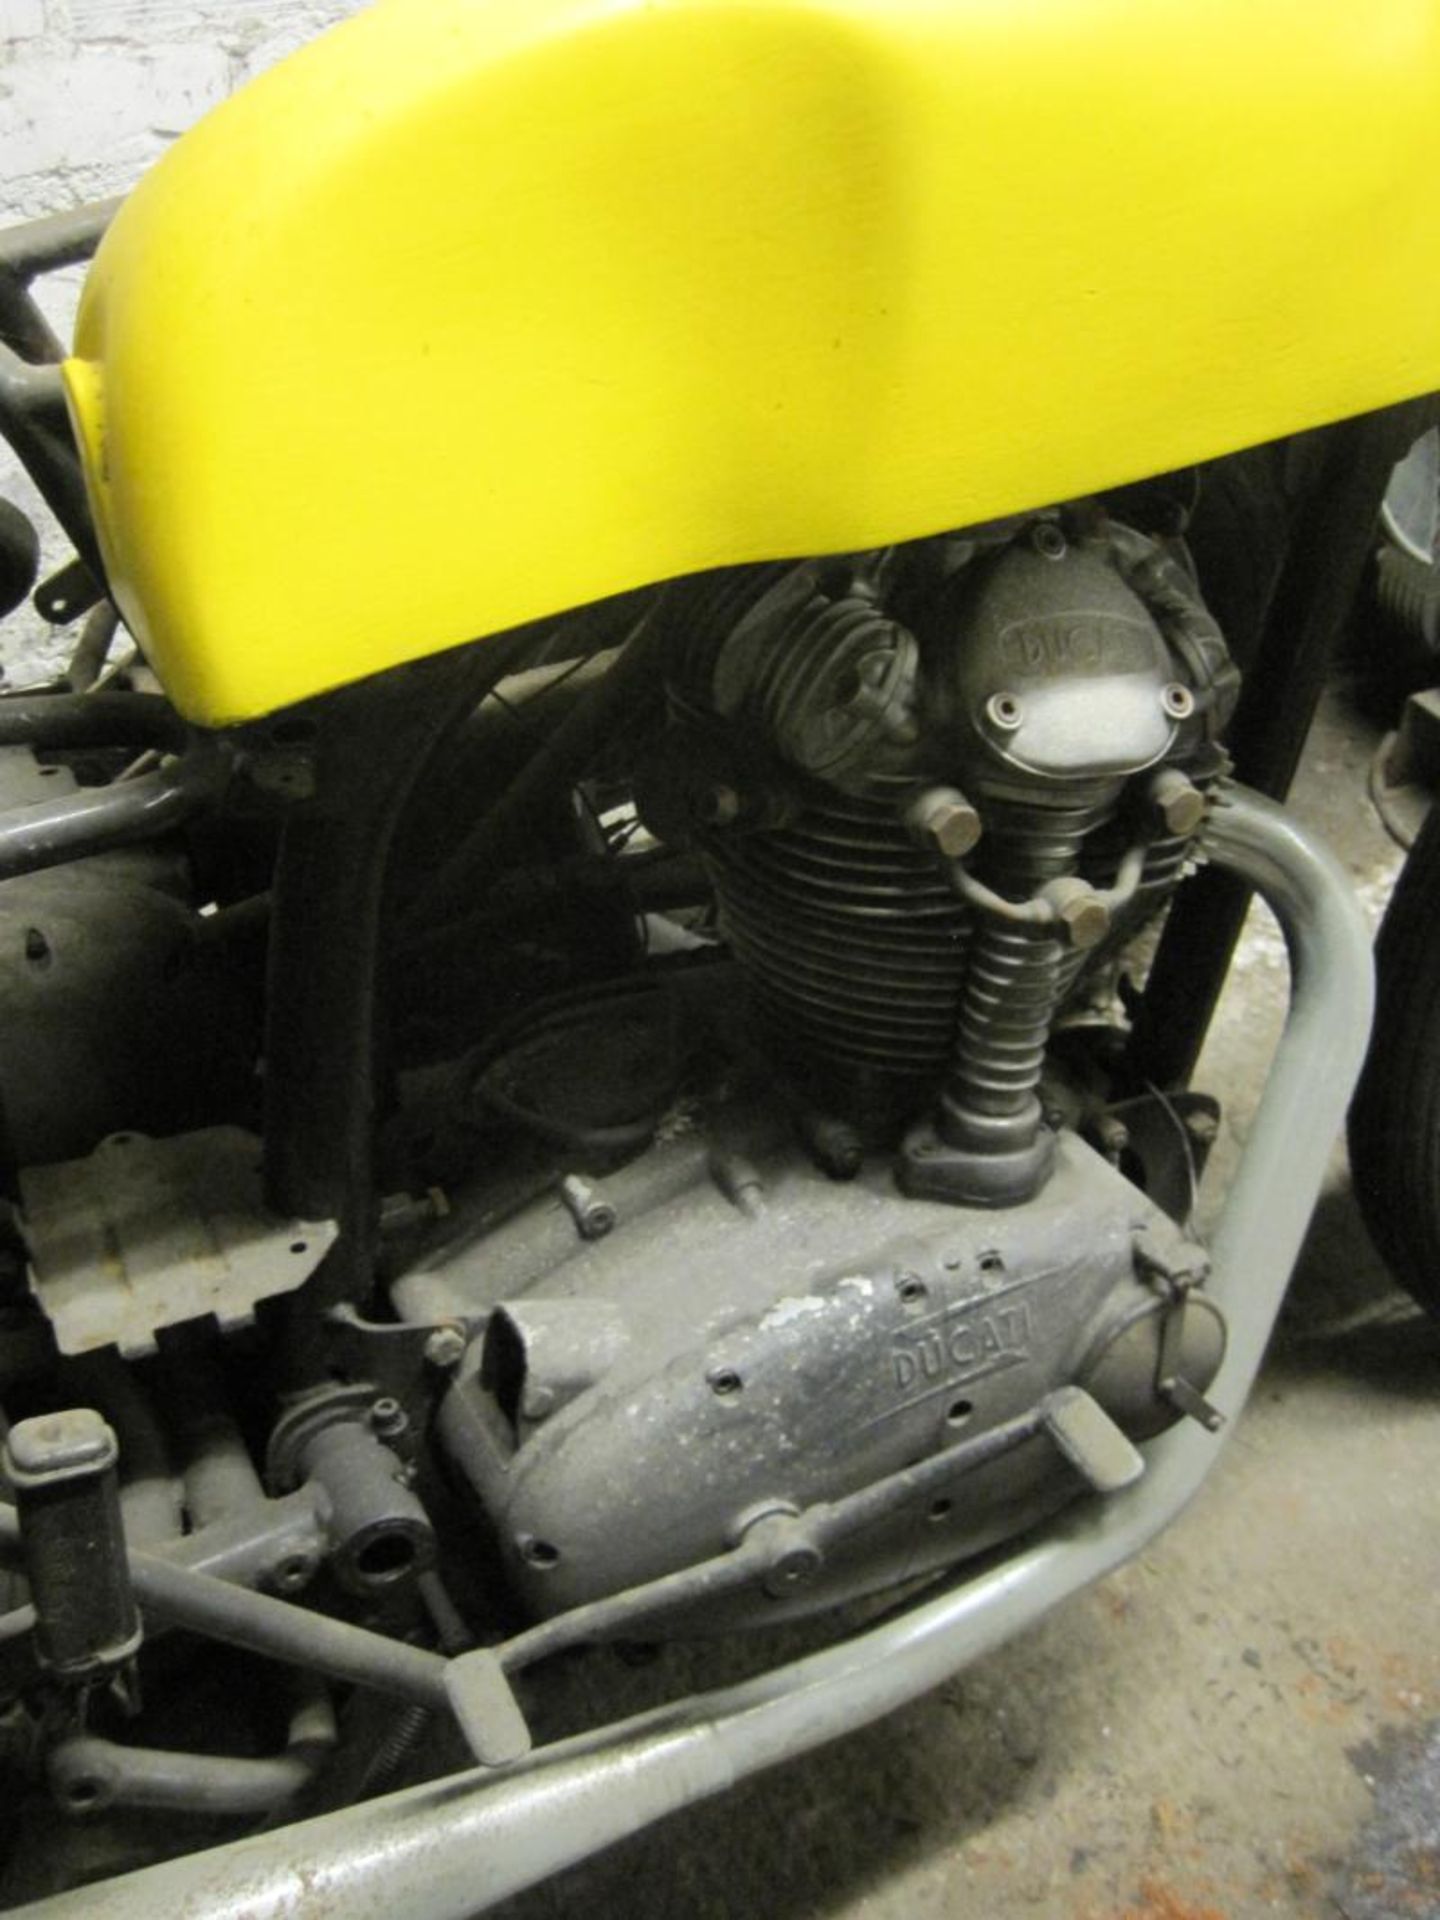 1971 350cc Ducati (Sebring) Reg. No. OCU 48J Frame No. Not found Engine No. DM350 04607 Purchased in - Image 5 of 7